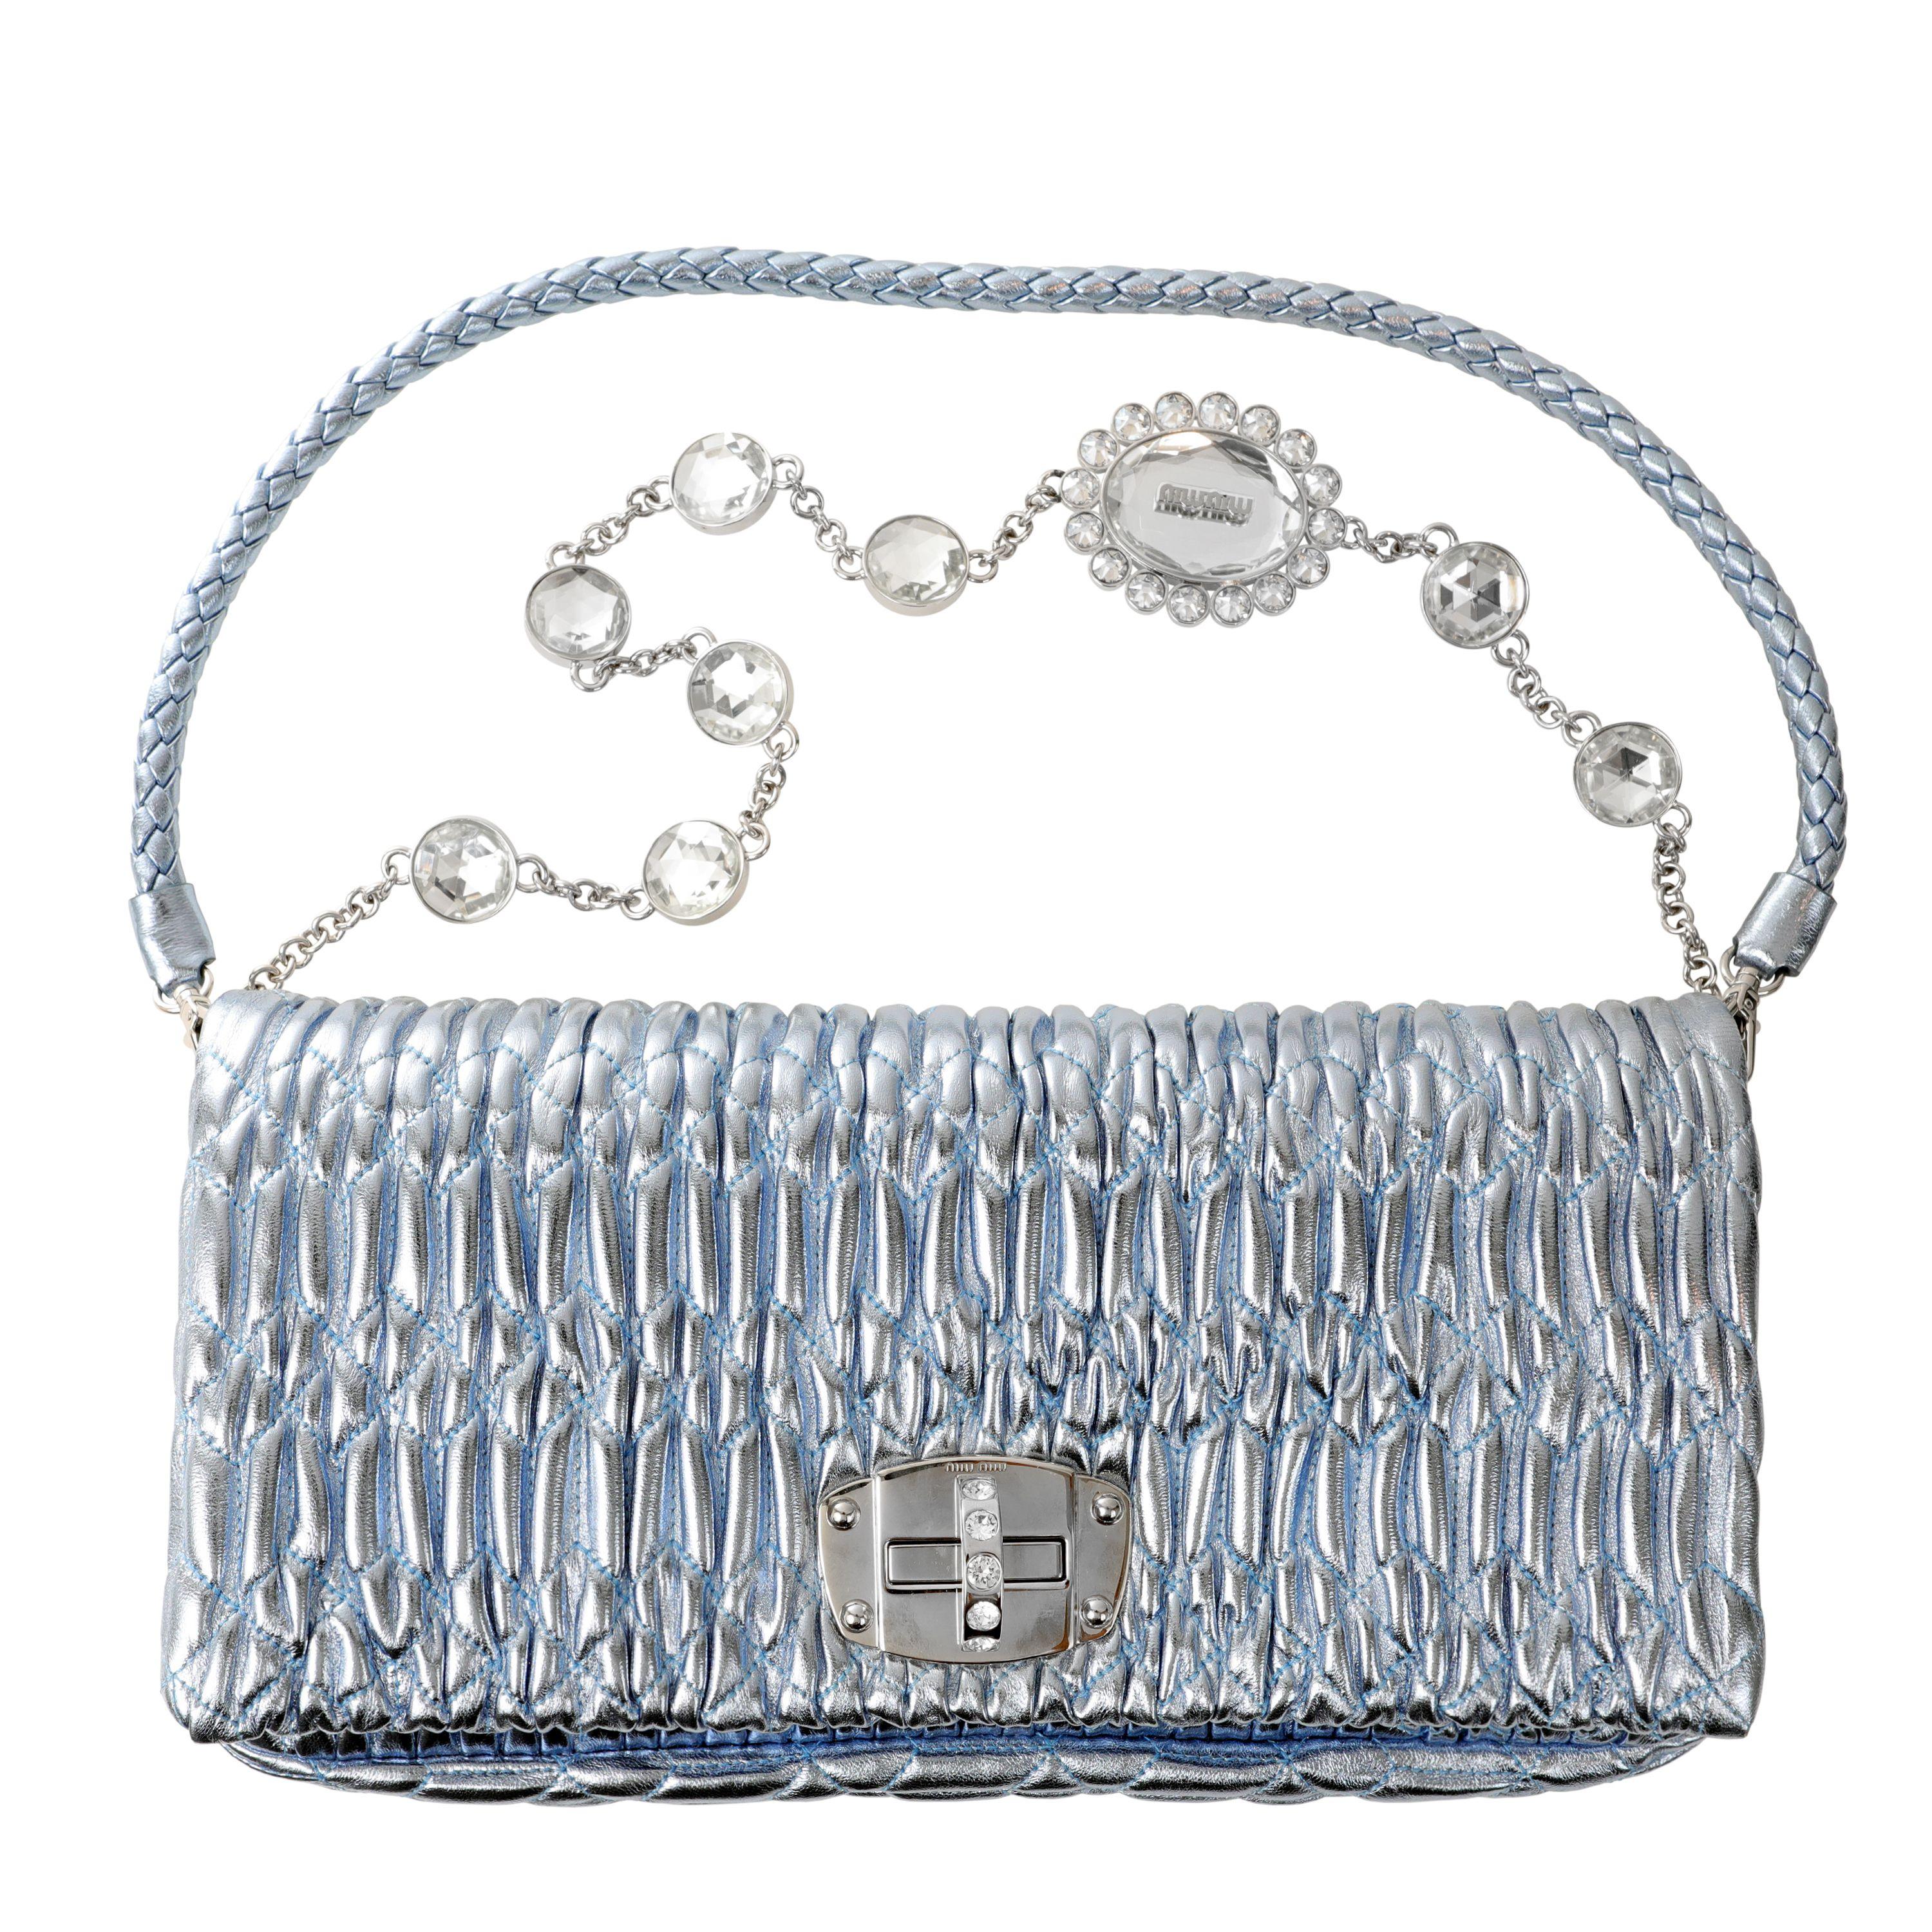 Gray Miu Miu Metallic Blue Crystal Iconic Cloquè Small Bag with Silver Hardware For Sale